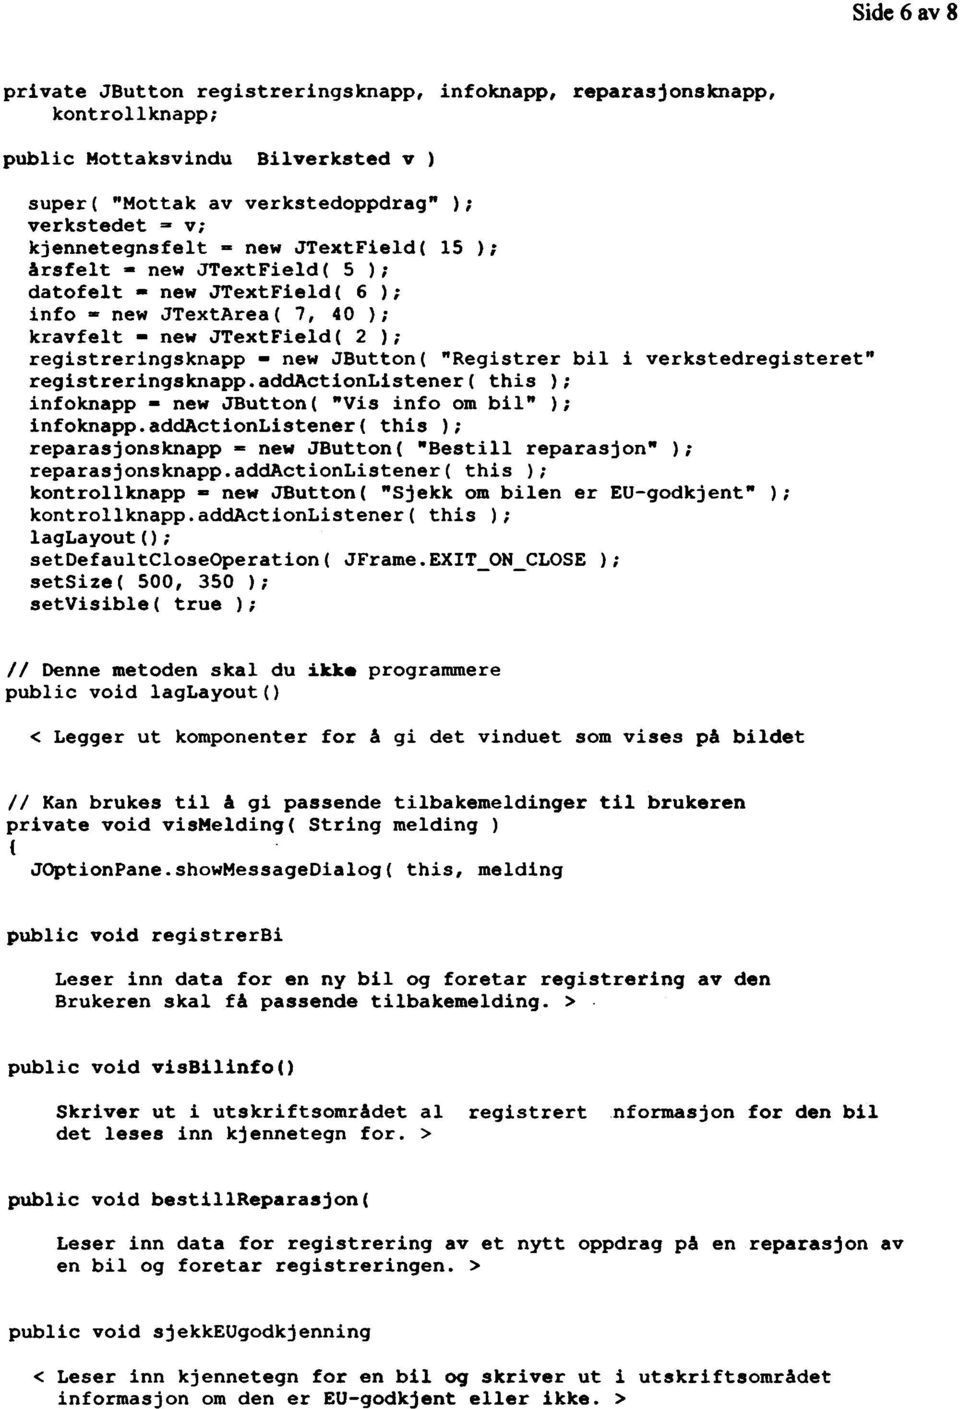 iverkstedregisteret" registreringsknapp.addactionlistener( this ); infoknapp - new JButton( "Vis info om bil" ); infoknapp.